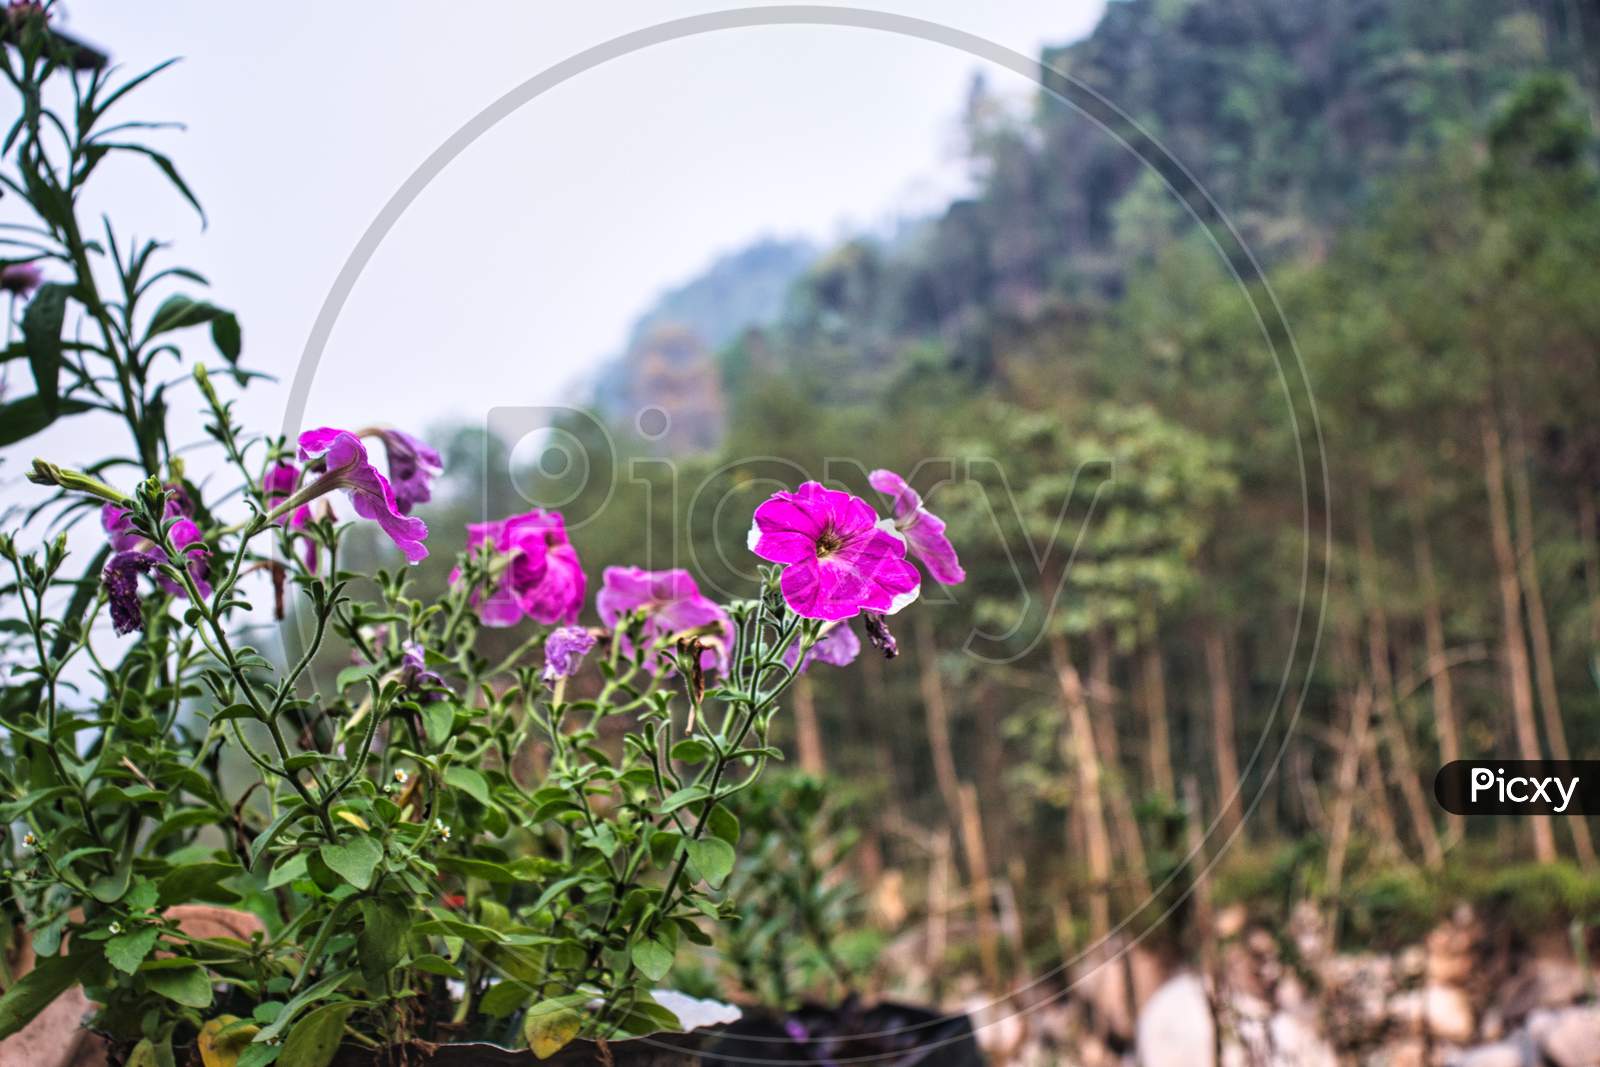 Sikkim means flower